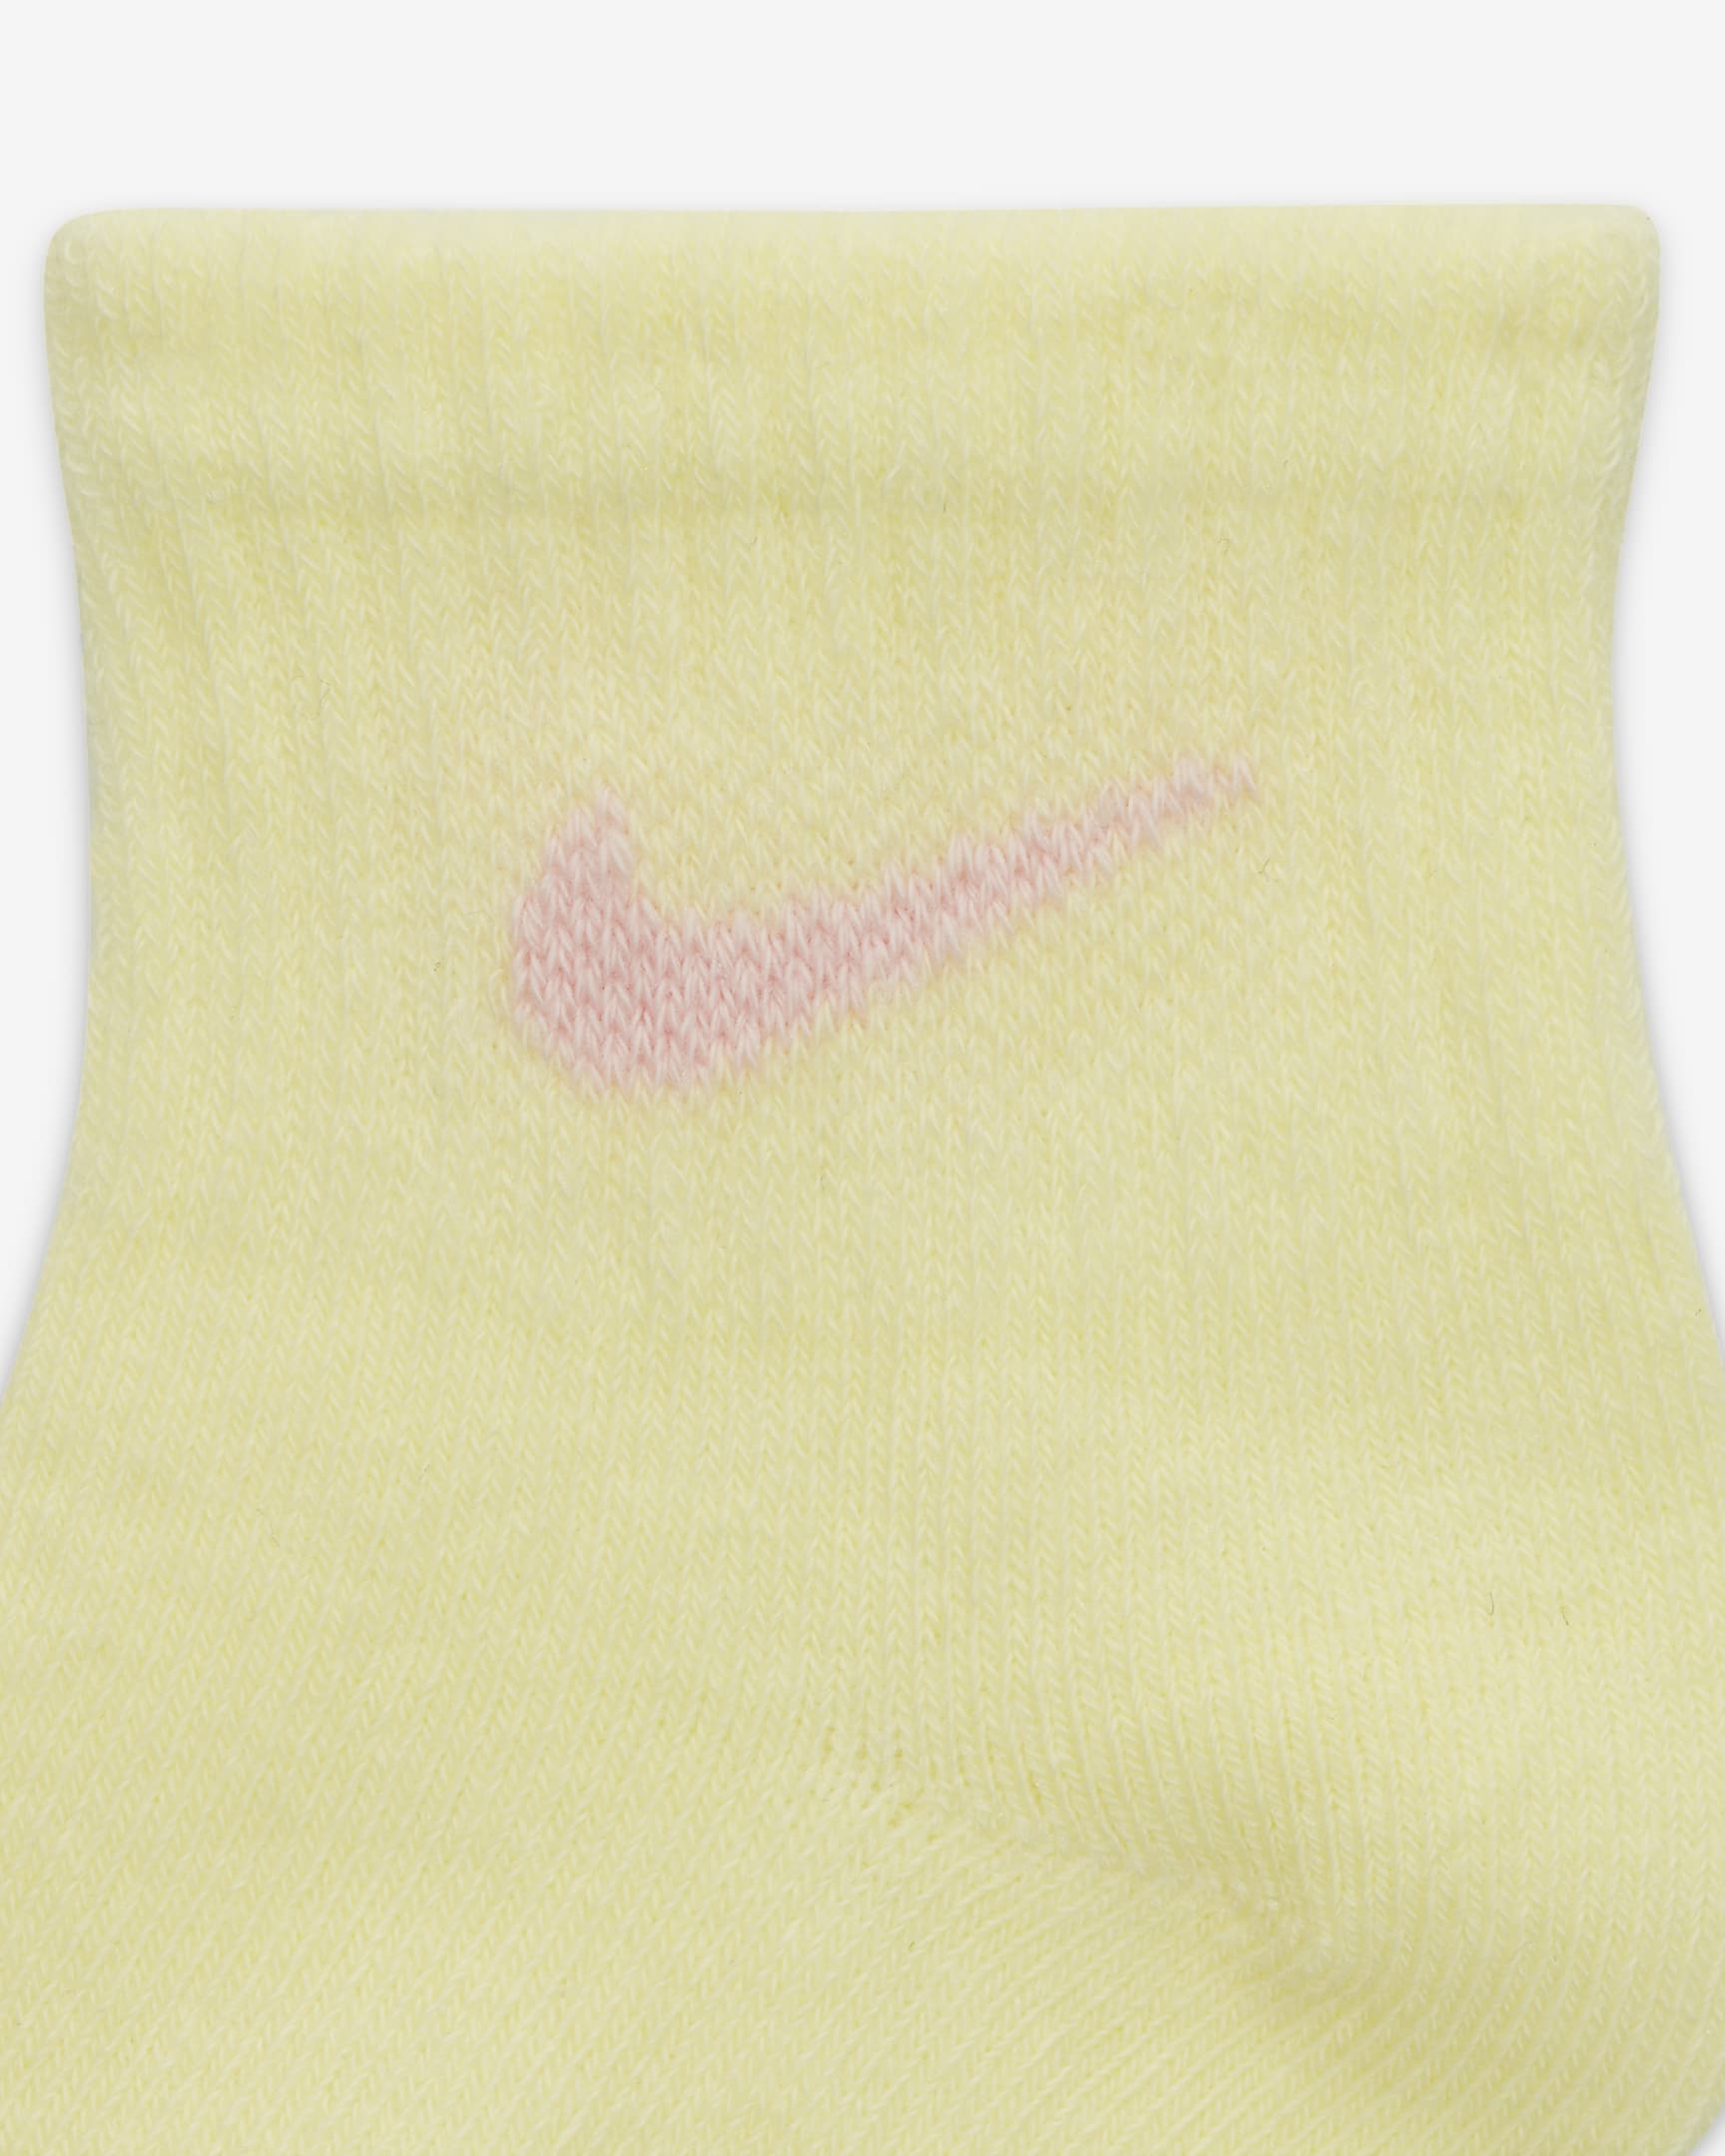 Nike Infant Crew Socks (6 Pairs) Baby Crew Socks. Nike.com